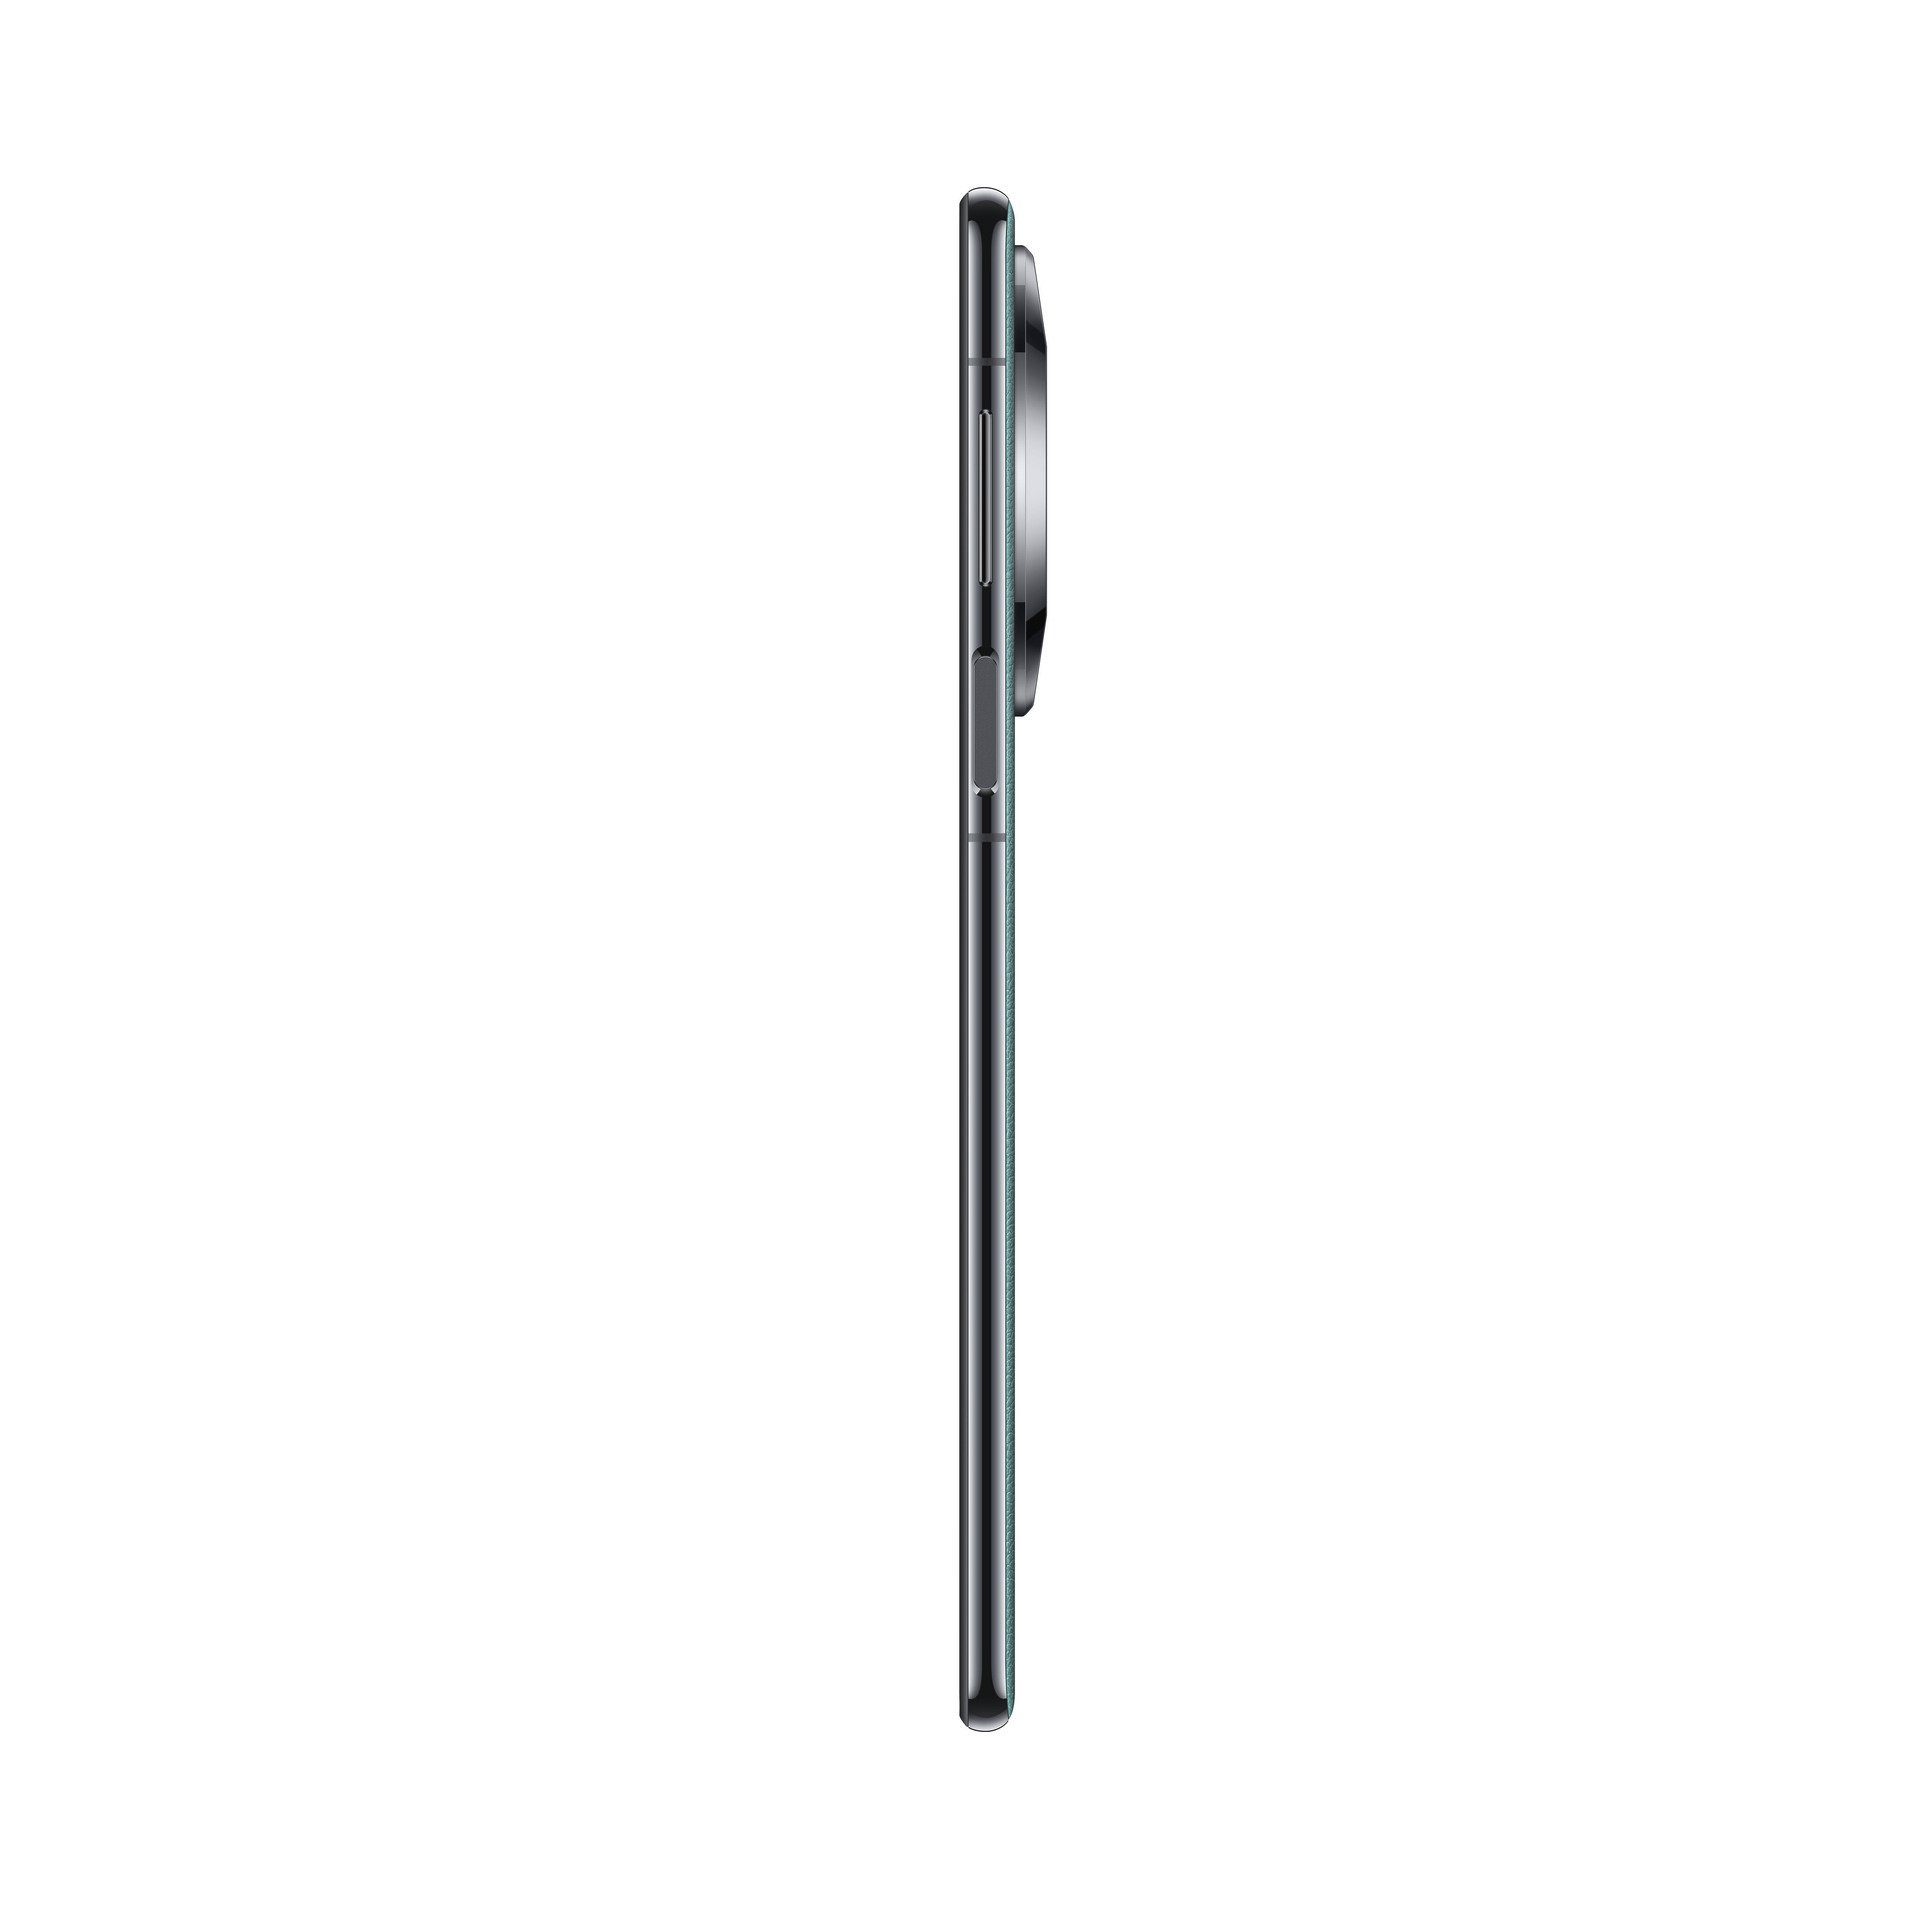 Huawei Mate X3 Smartphone (16,3 512 Speicherplatz, MP Kamera) GB Dunkelgrün cm/6,4 Zoll, 50